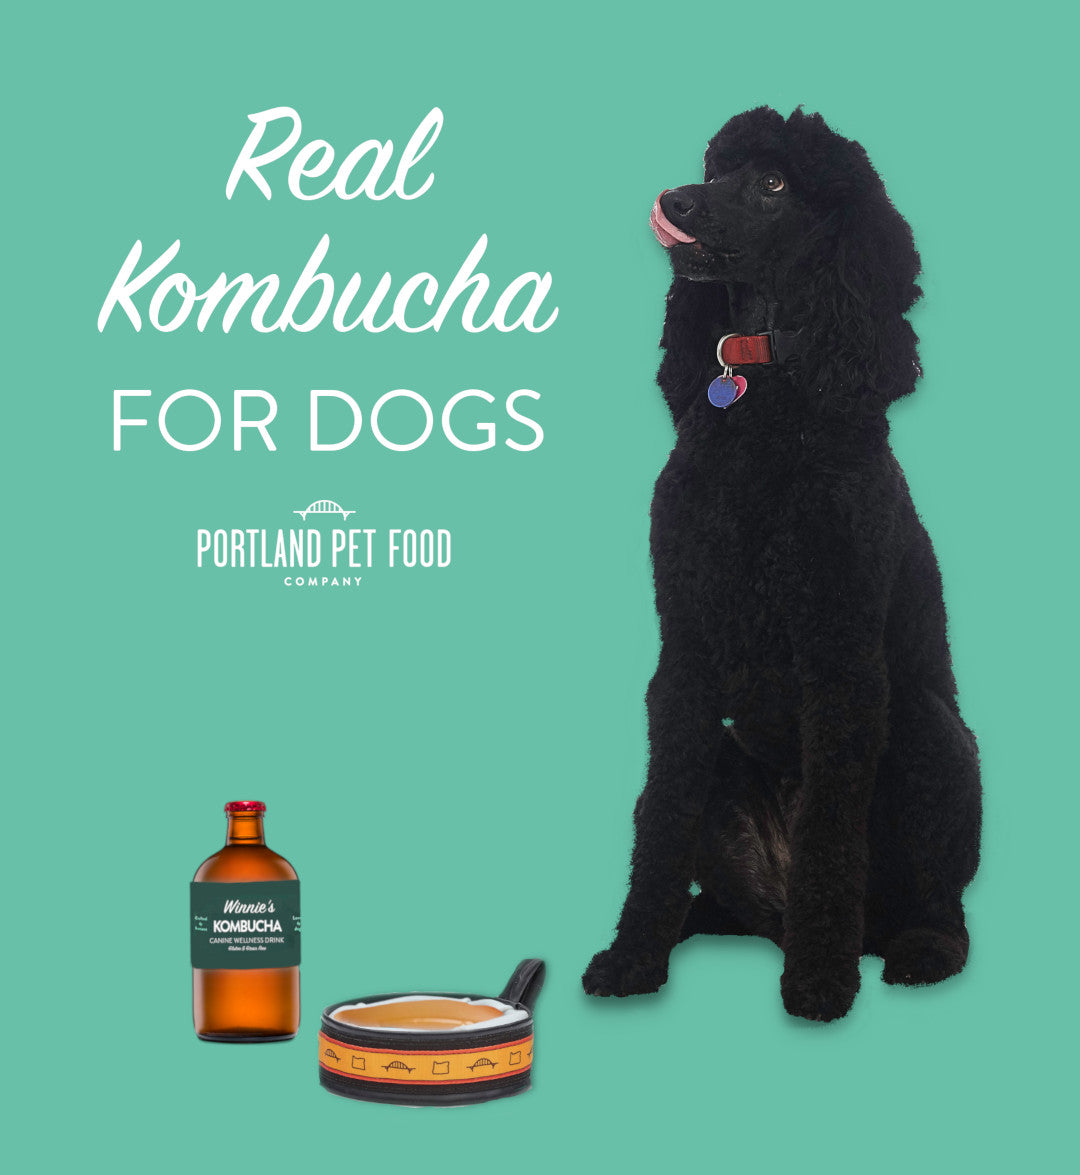 kombucha for dogs april fools